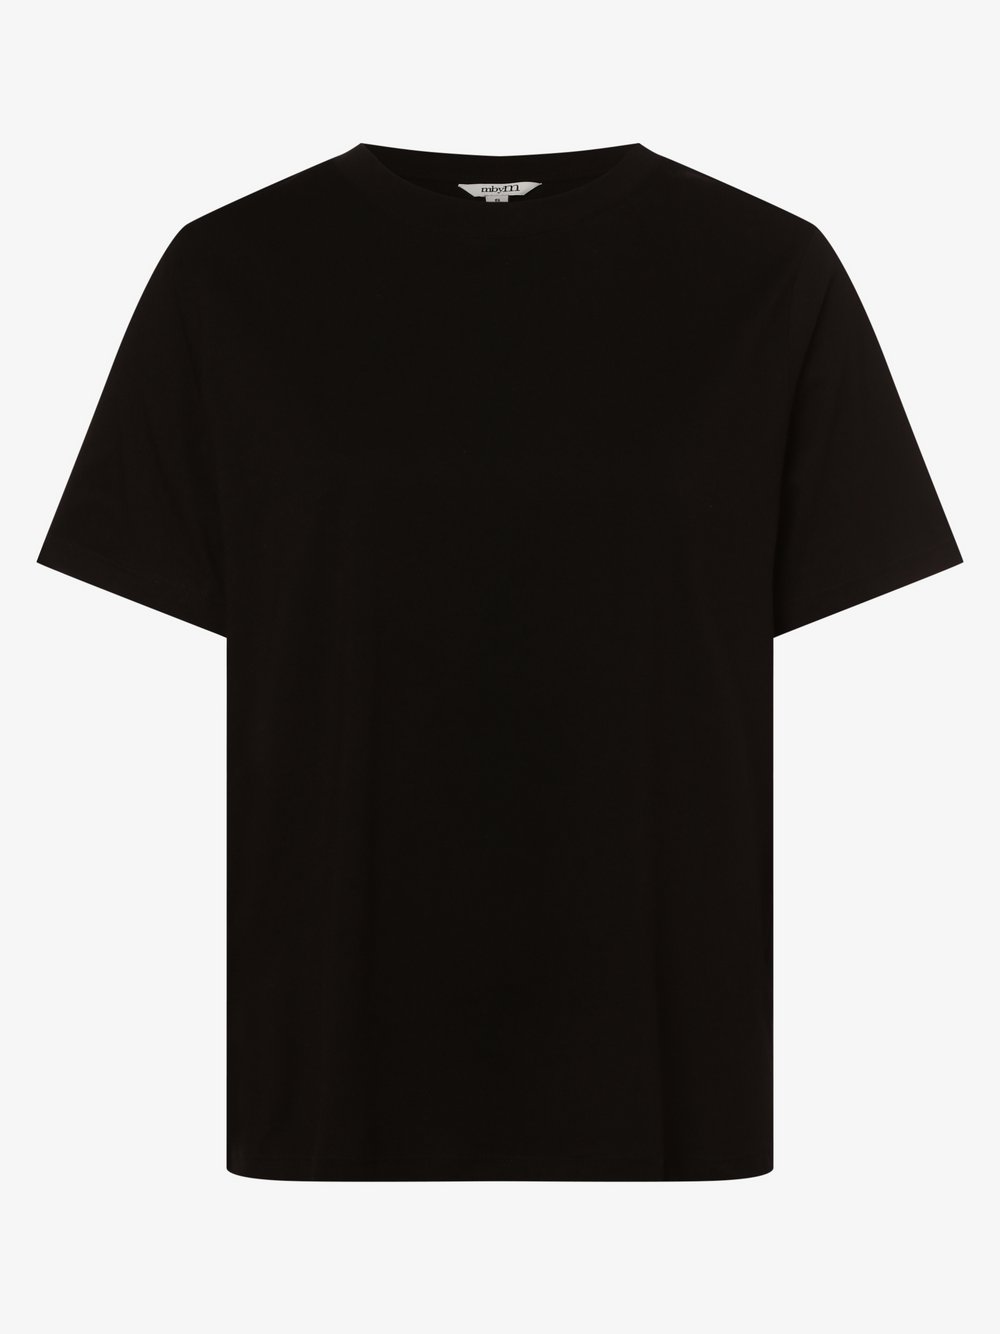 MbyM - T-shirt damski – Beeja, czarny